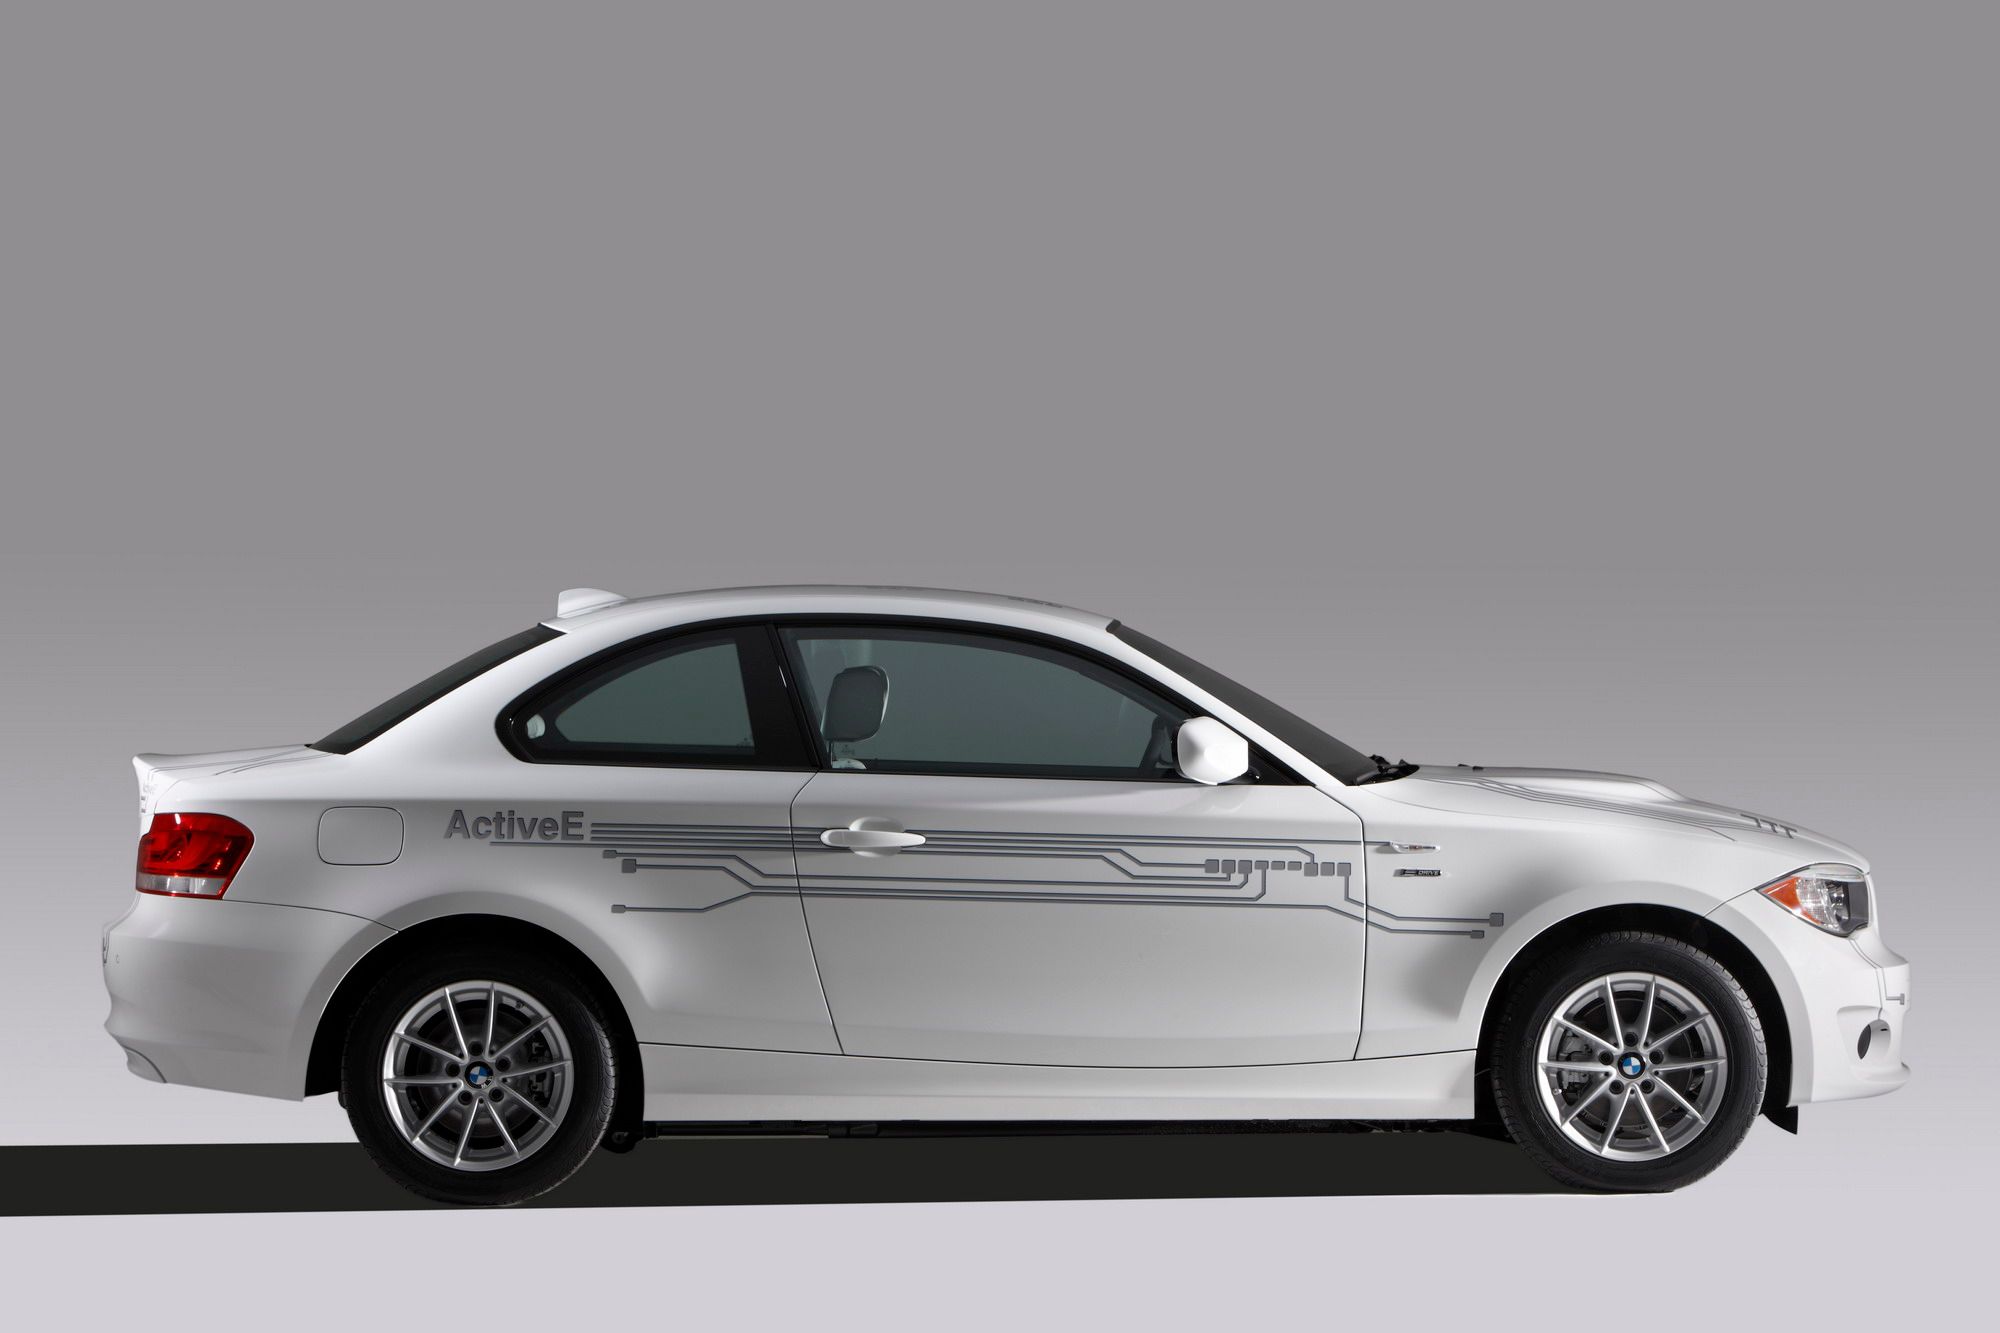 2012 BMW ActiveE Electric Vehicle